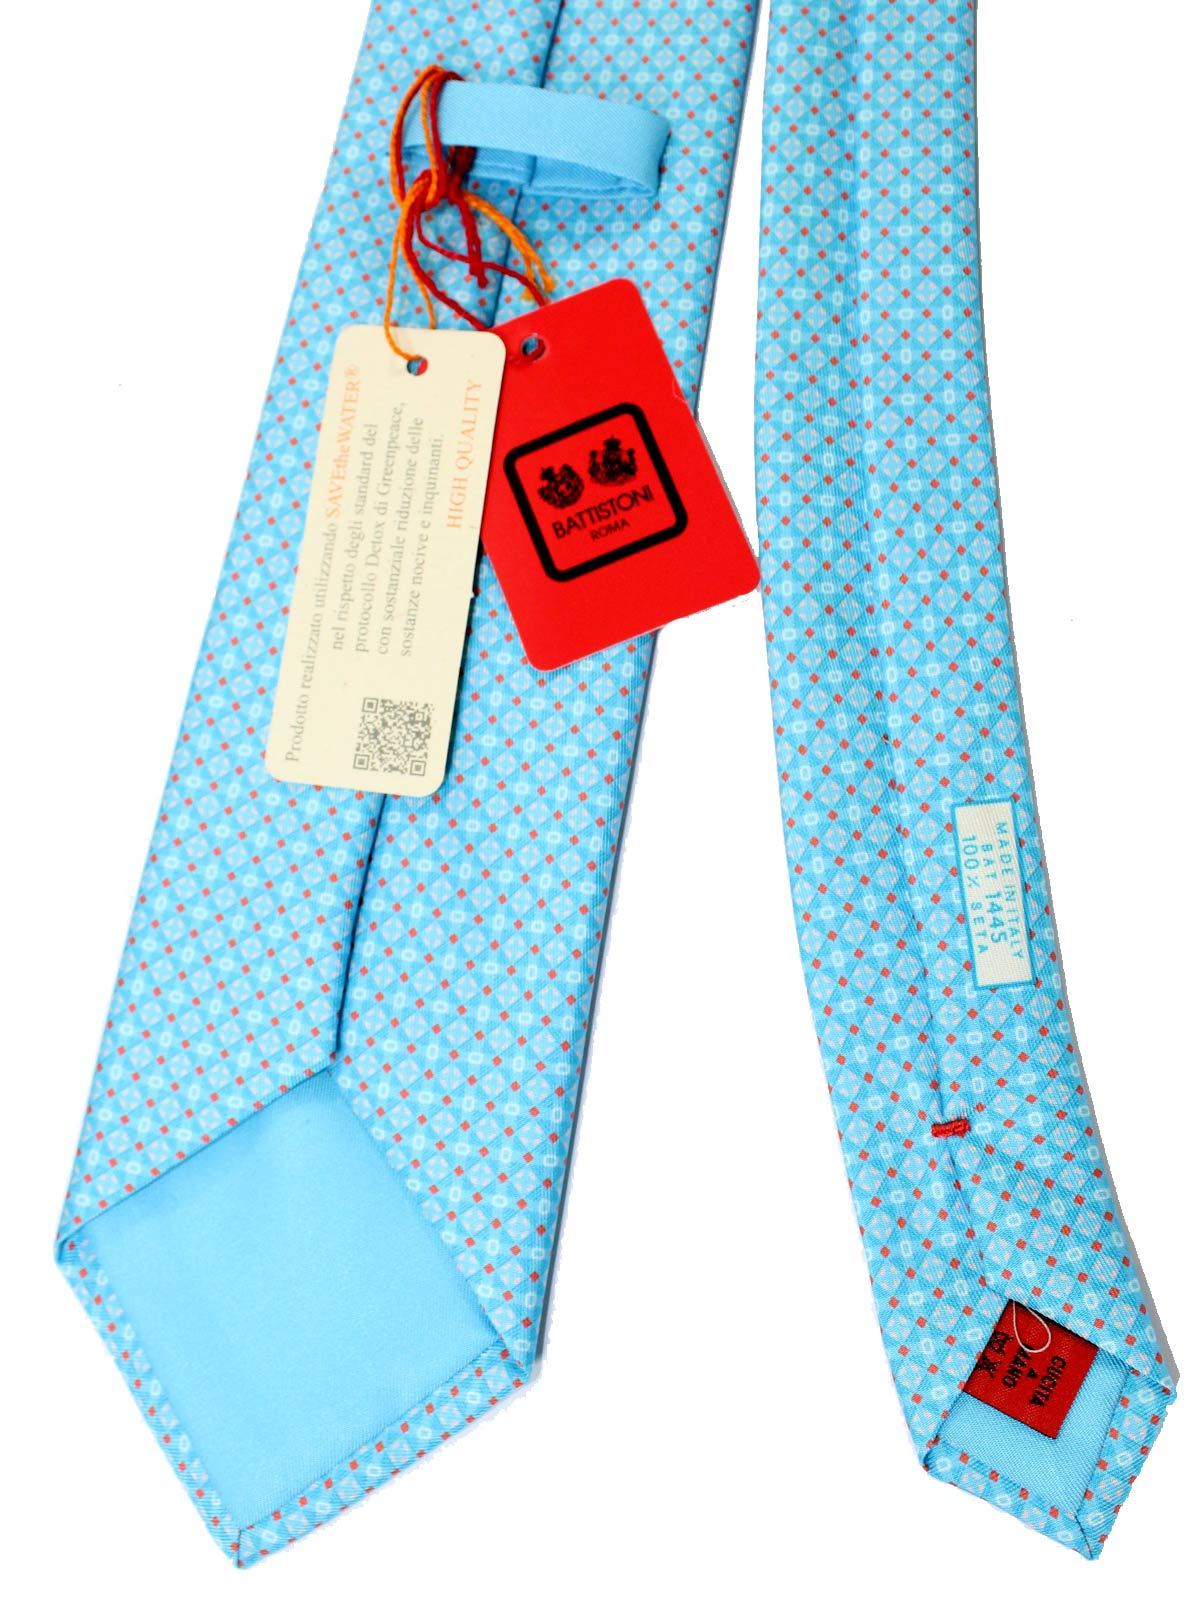 Printed silk tie - Battistoni